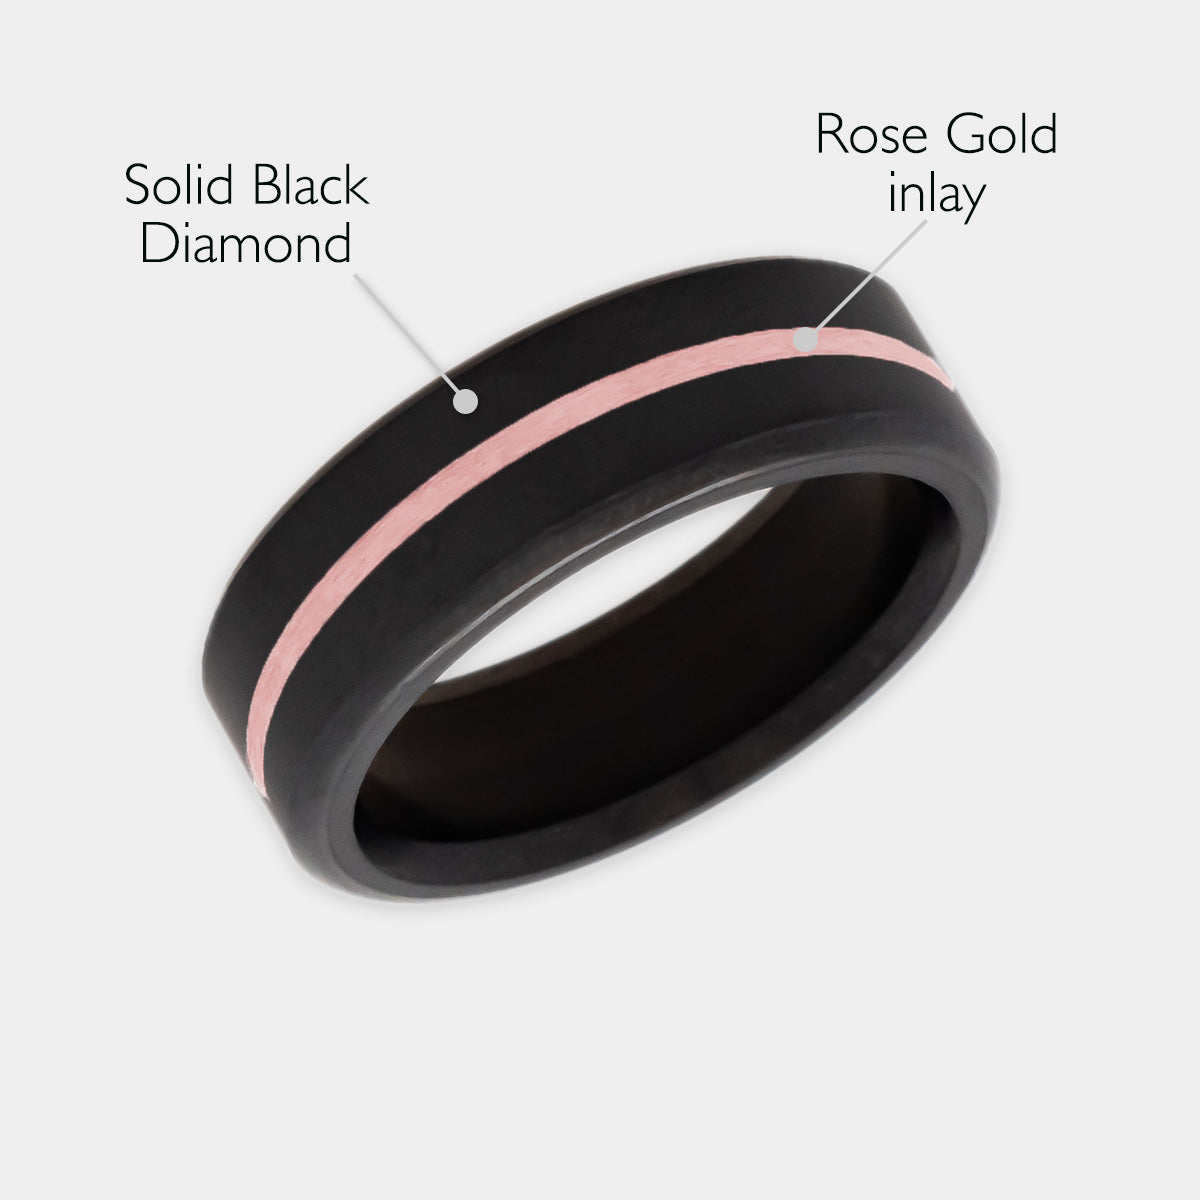 Black Diamond - Men’s Ring 7mm - 10k Rose Gold Inlay - KRATOS - Elysium Black Diamond